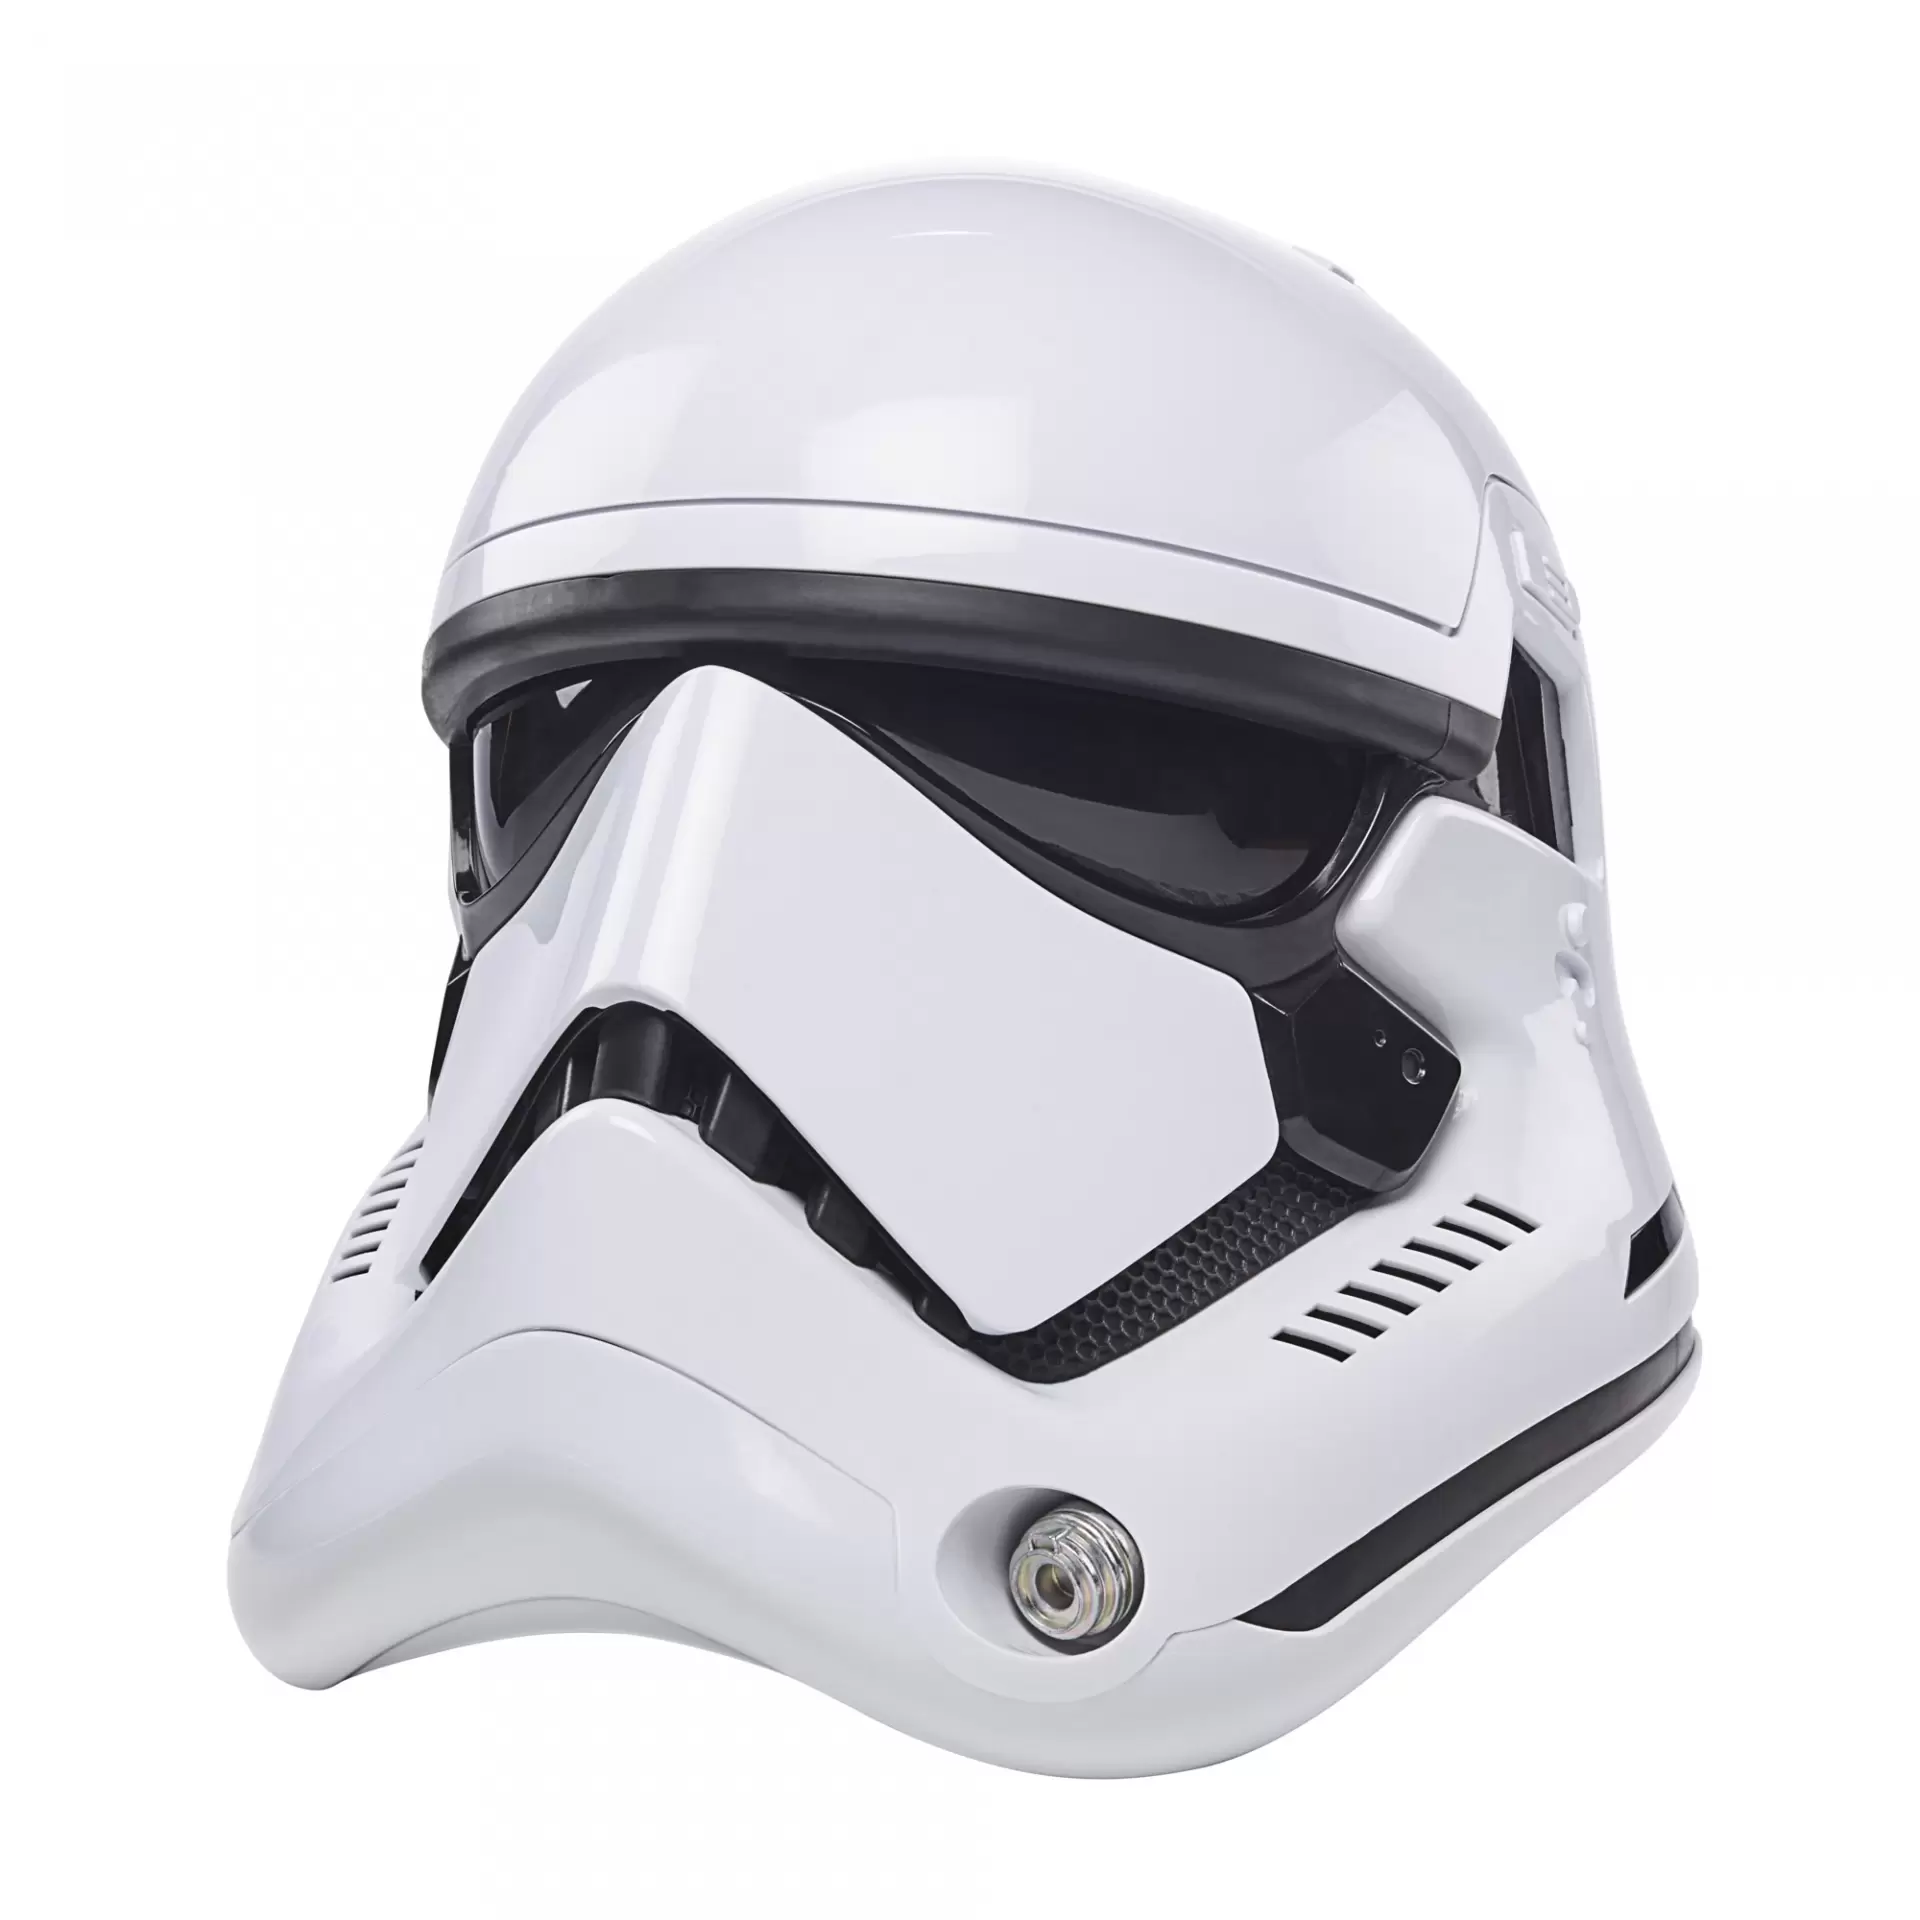 Star wars the black series first order stormtrooper electronic helmet8